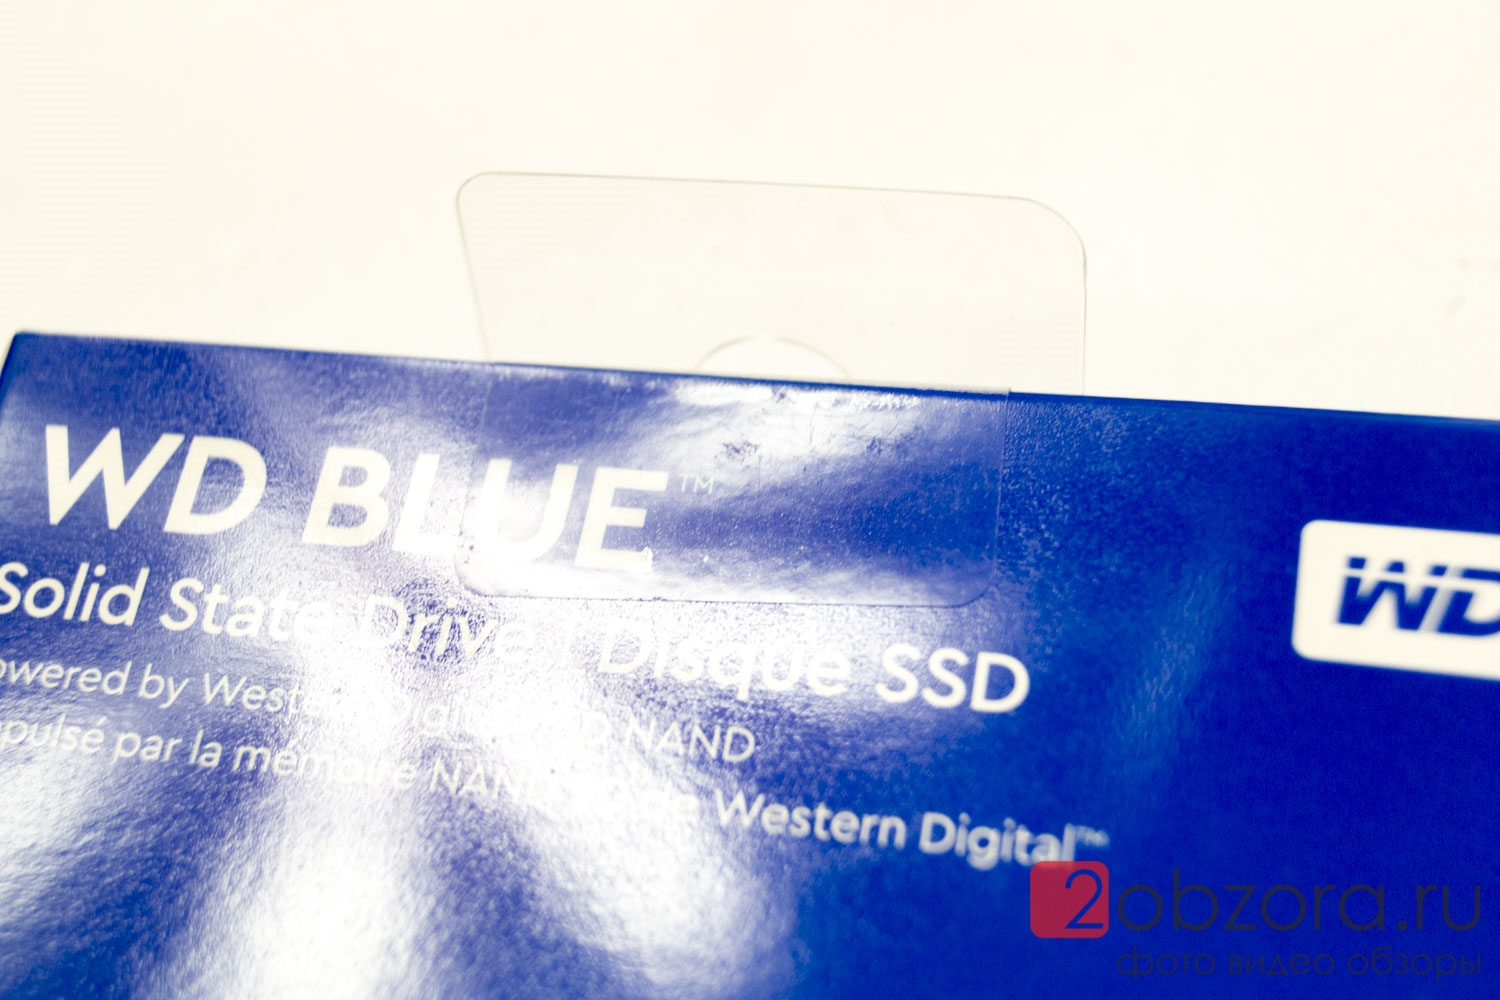 SSD диск WD Blue 500Gb (WDS500G2B0A)